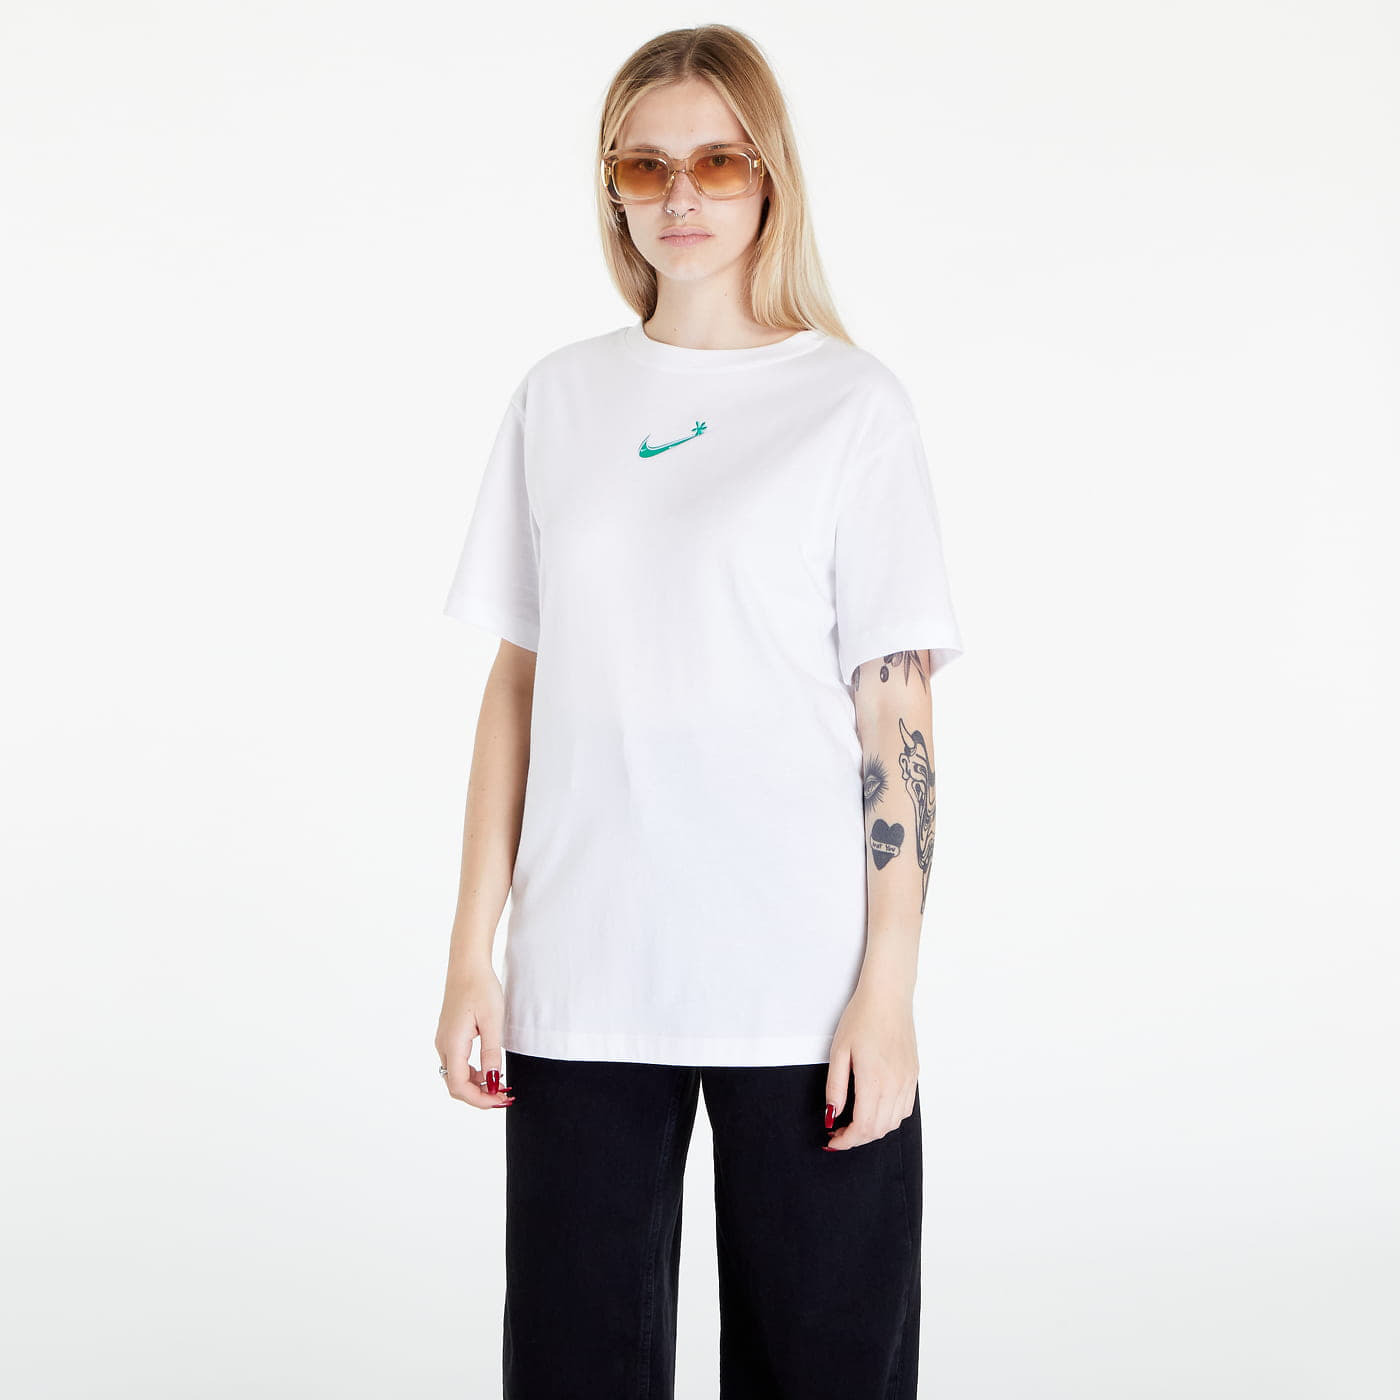 Nike Sportswear Women\'s T-Shirt White